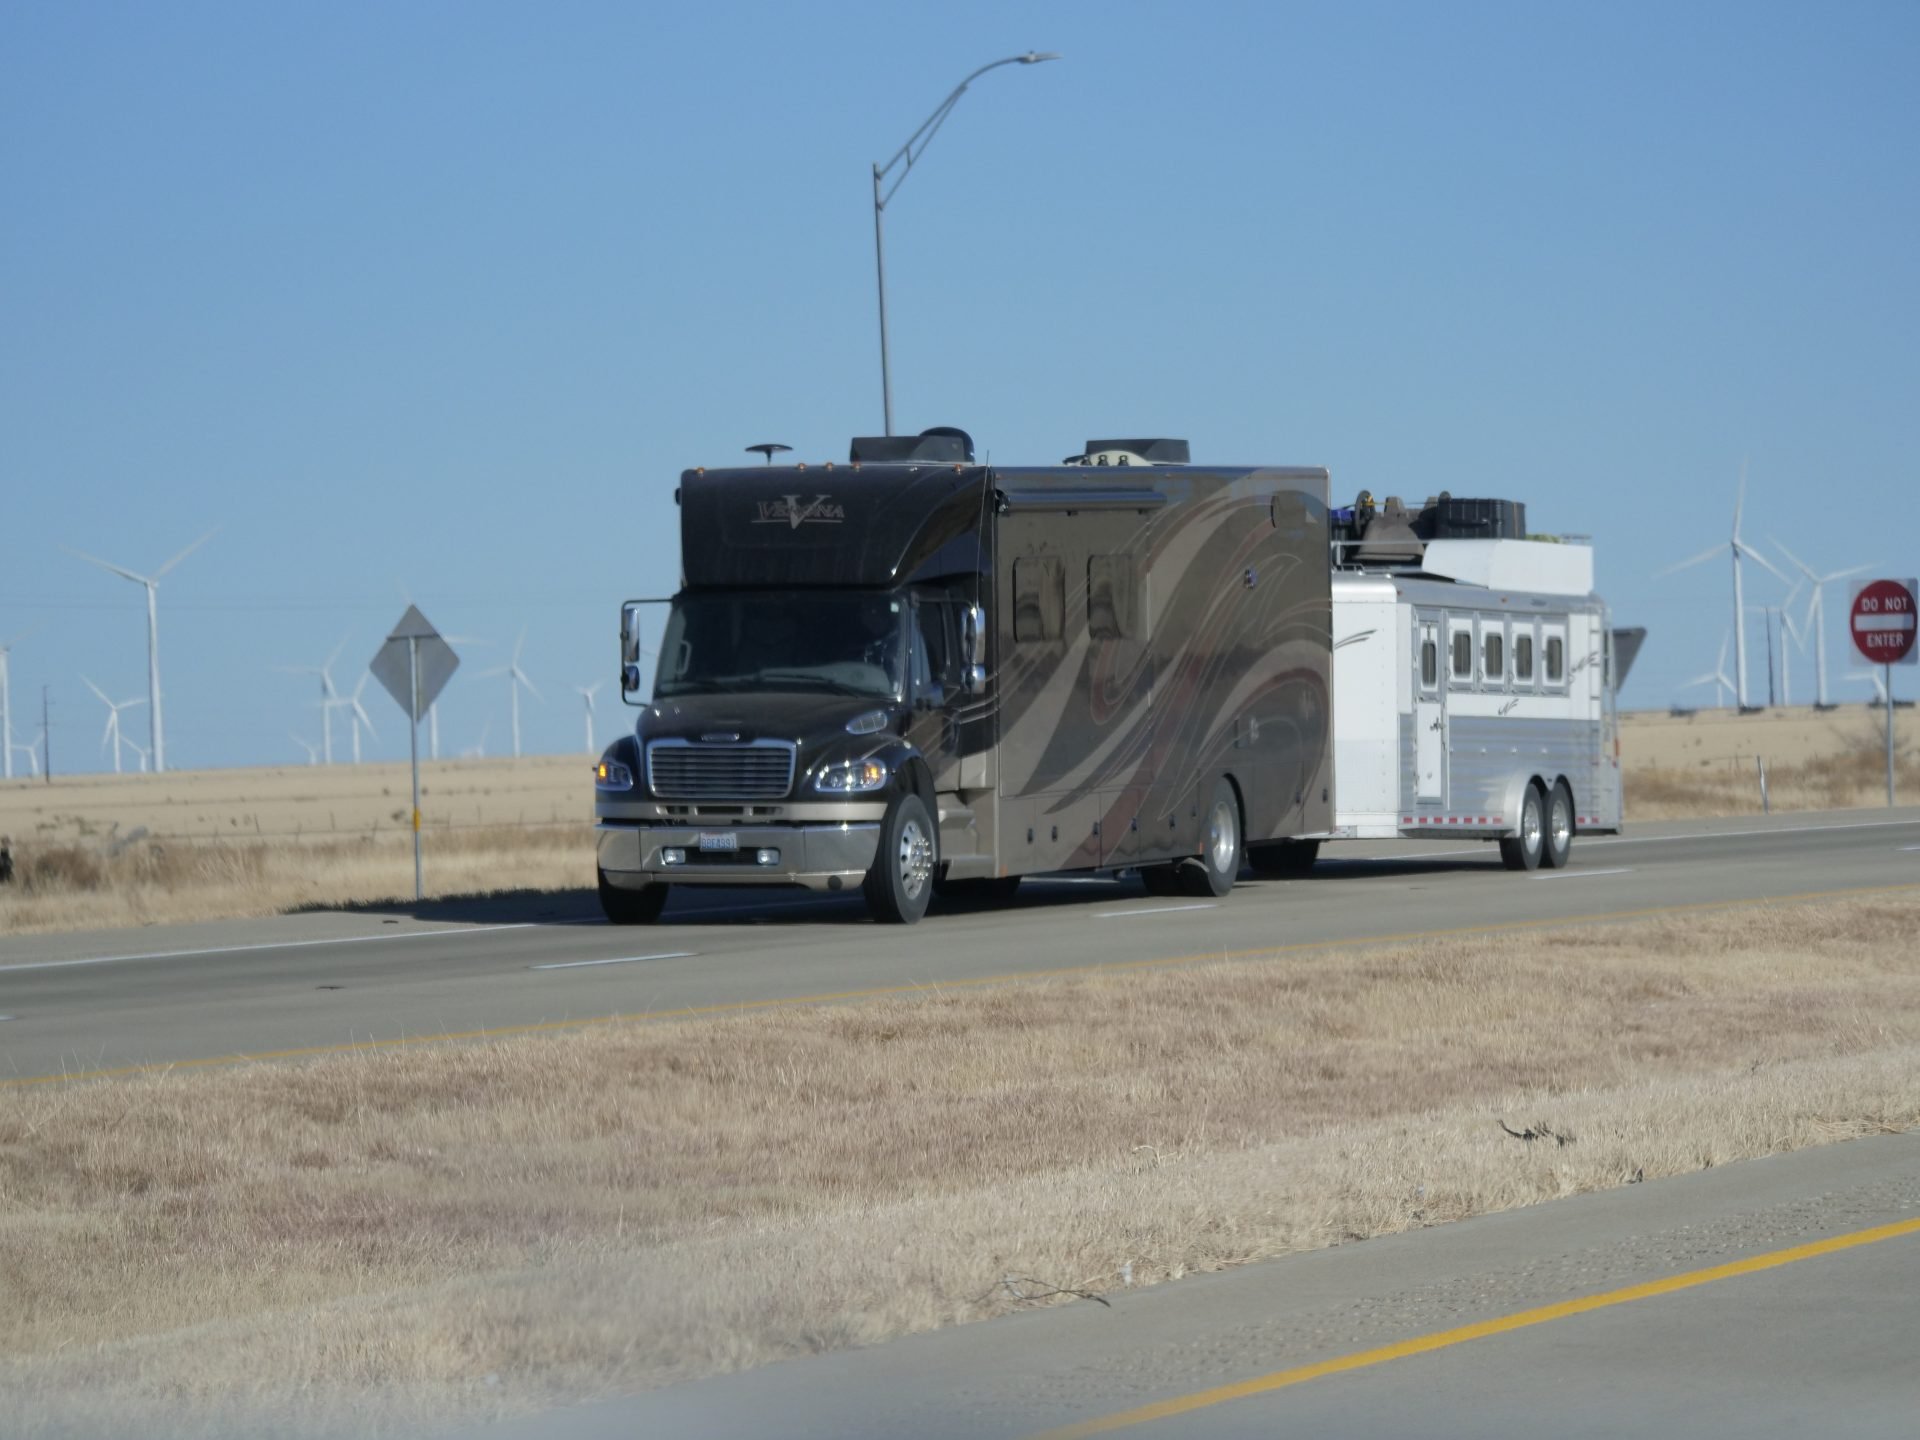 Super C motorhome pulling a trailer